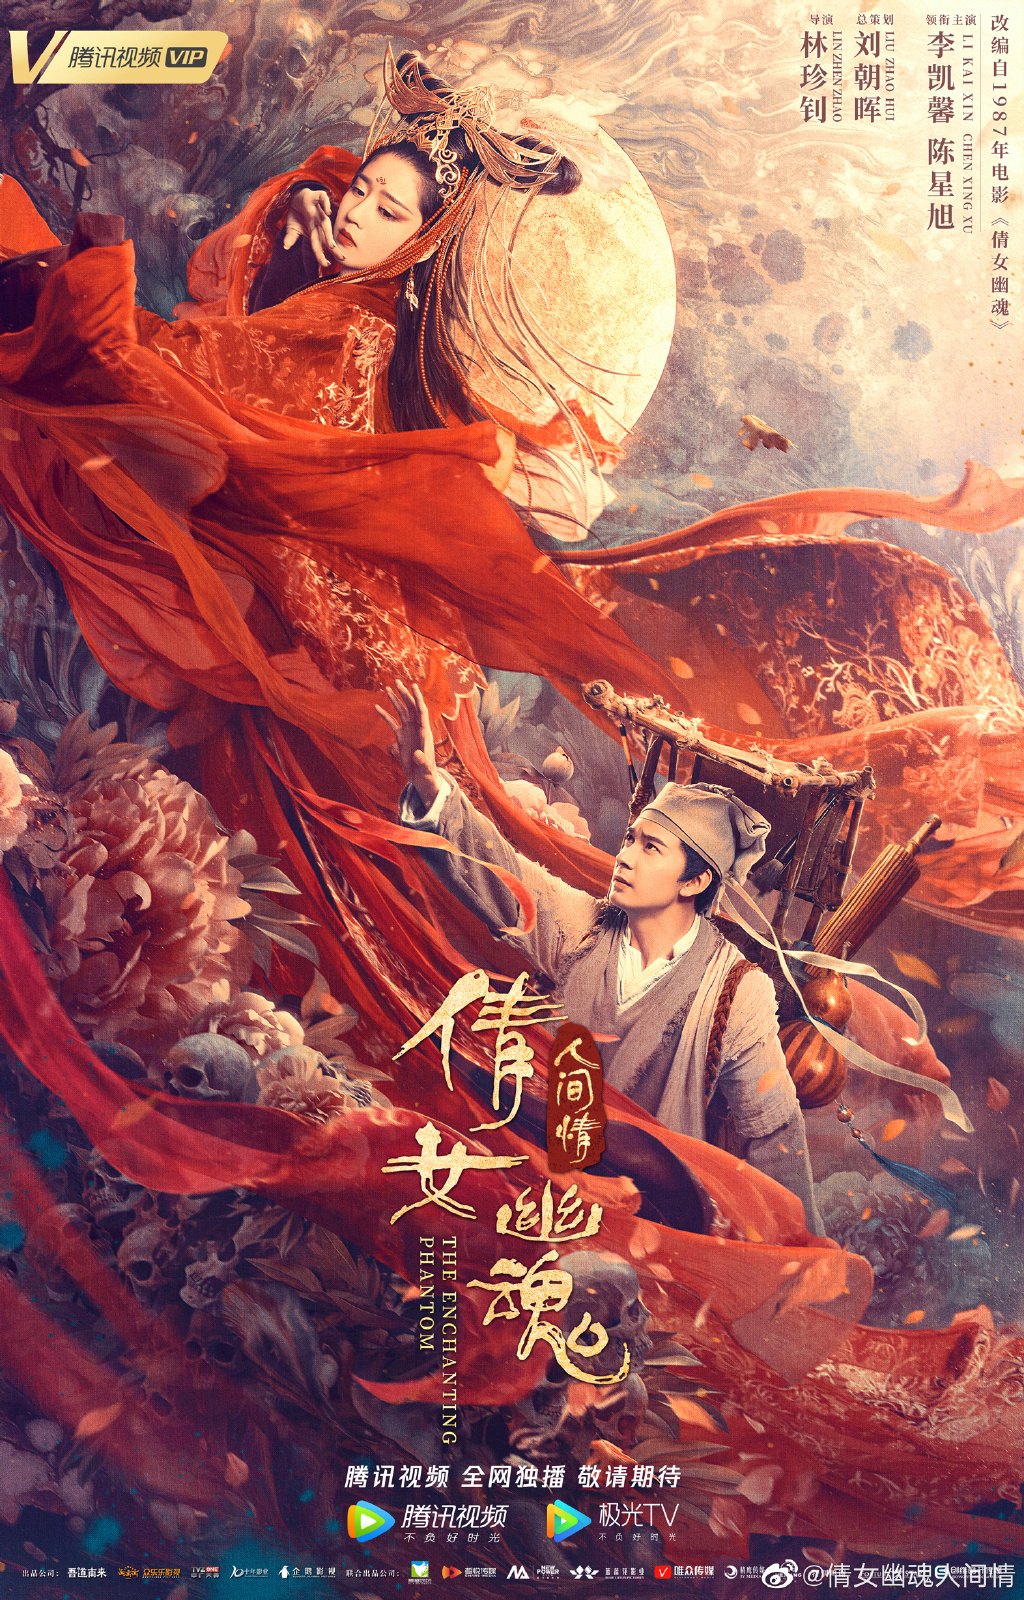 Poster Phim Tân Thiện Nữ U Hồn (The Enchanting Phantom)